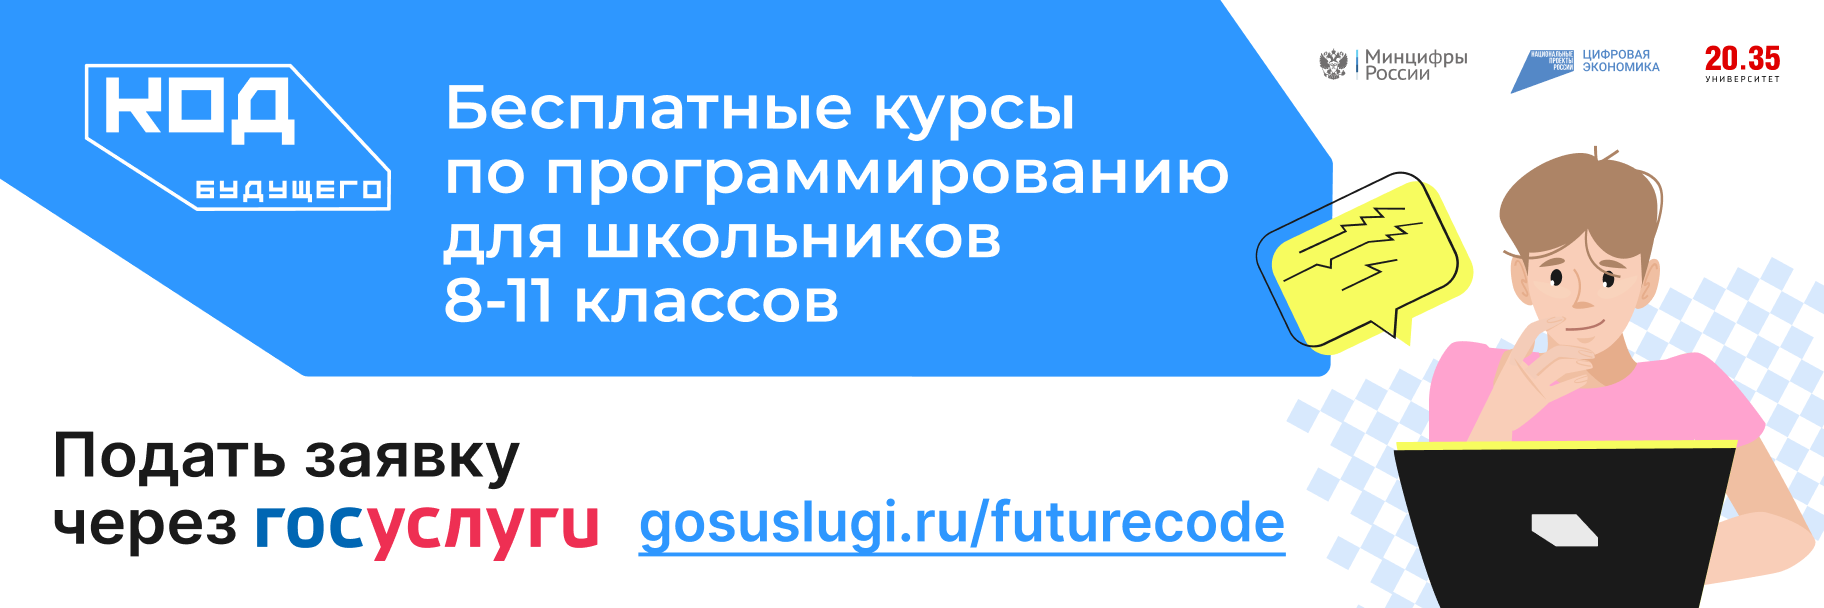 Код будущего тест. Код будущего. Проект код будущего. Код будущего для школьников. Федеральный проект код будущего.